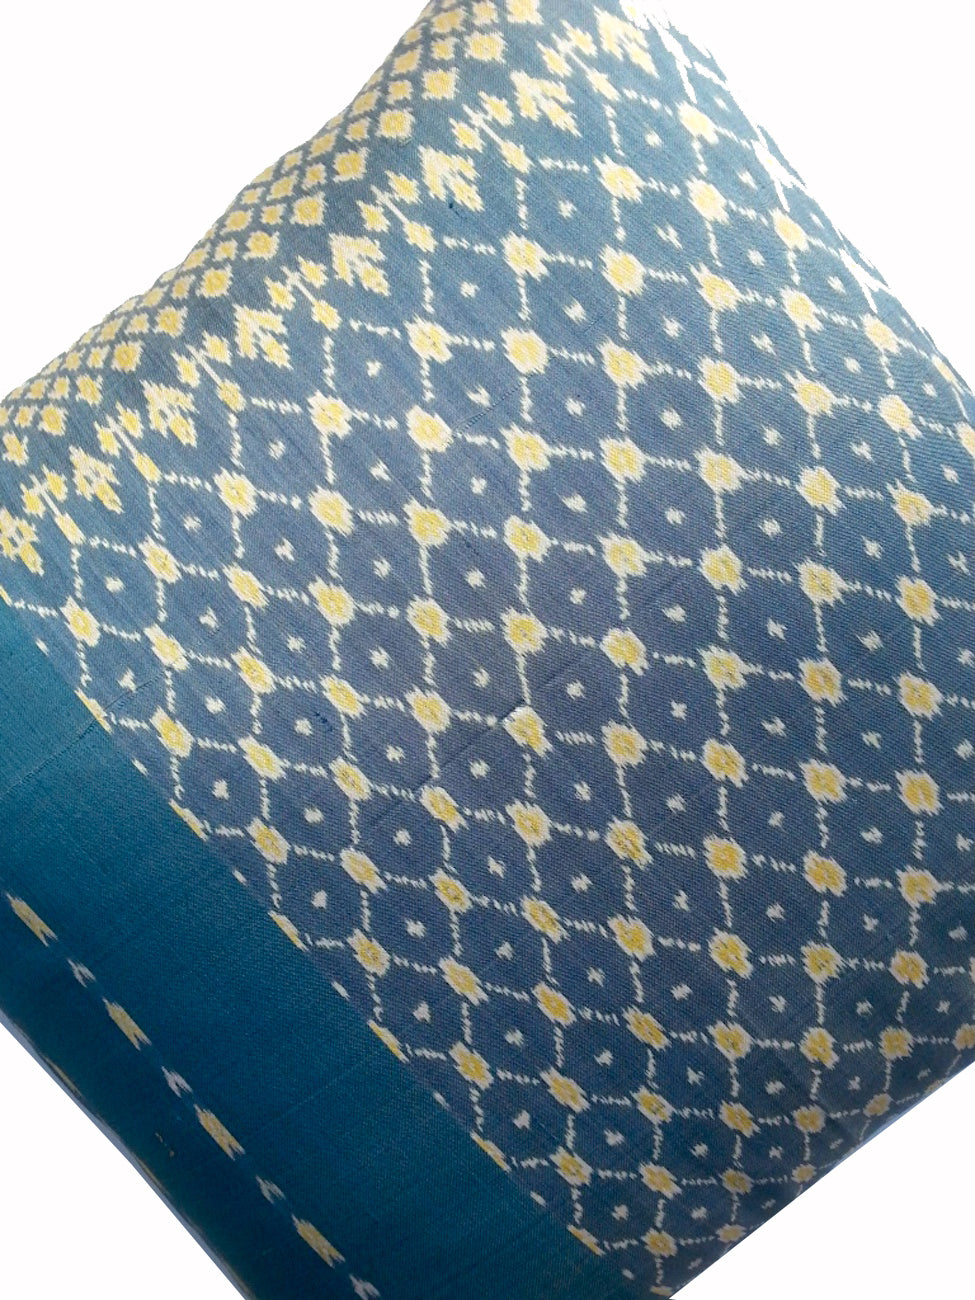 Cambodian Silk Ikat Pillow Teal Blue Ivory Yellow